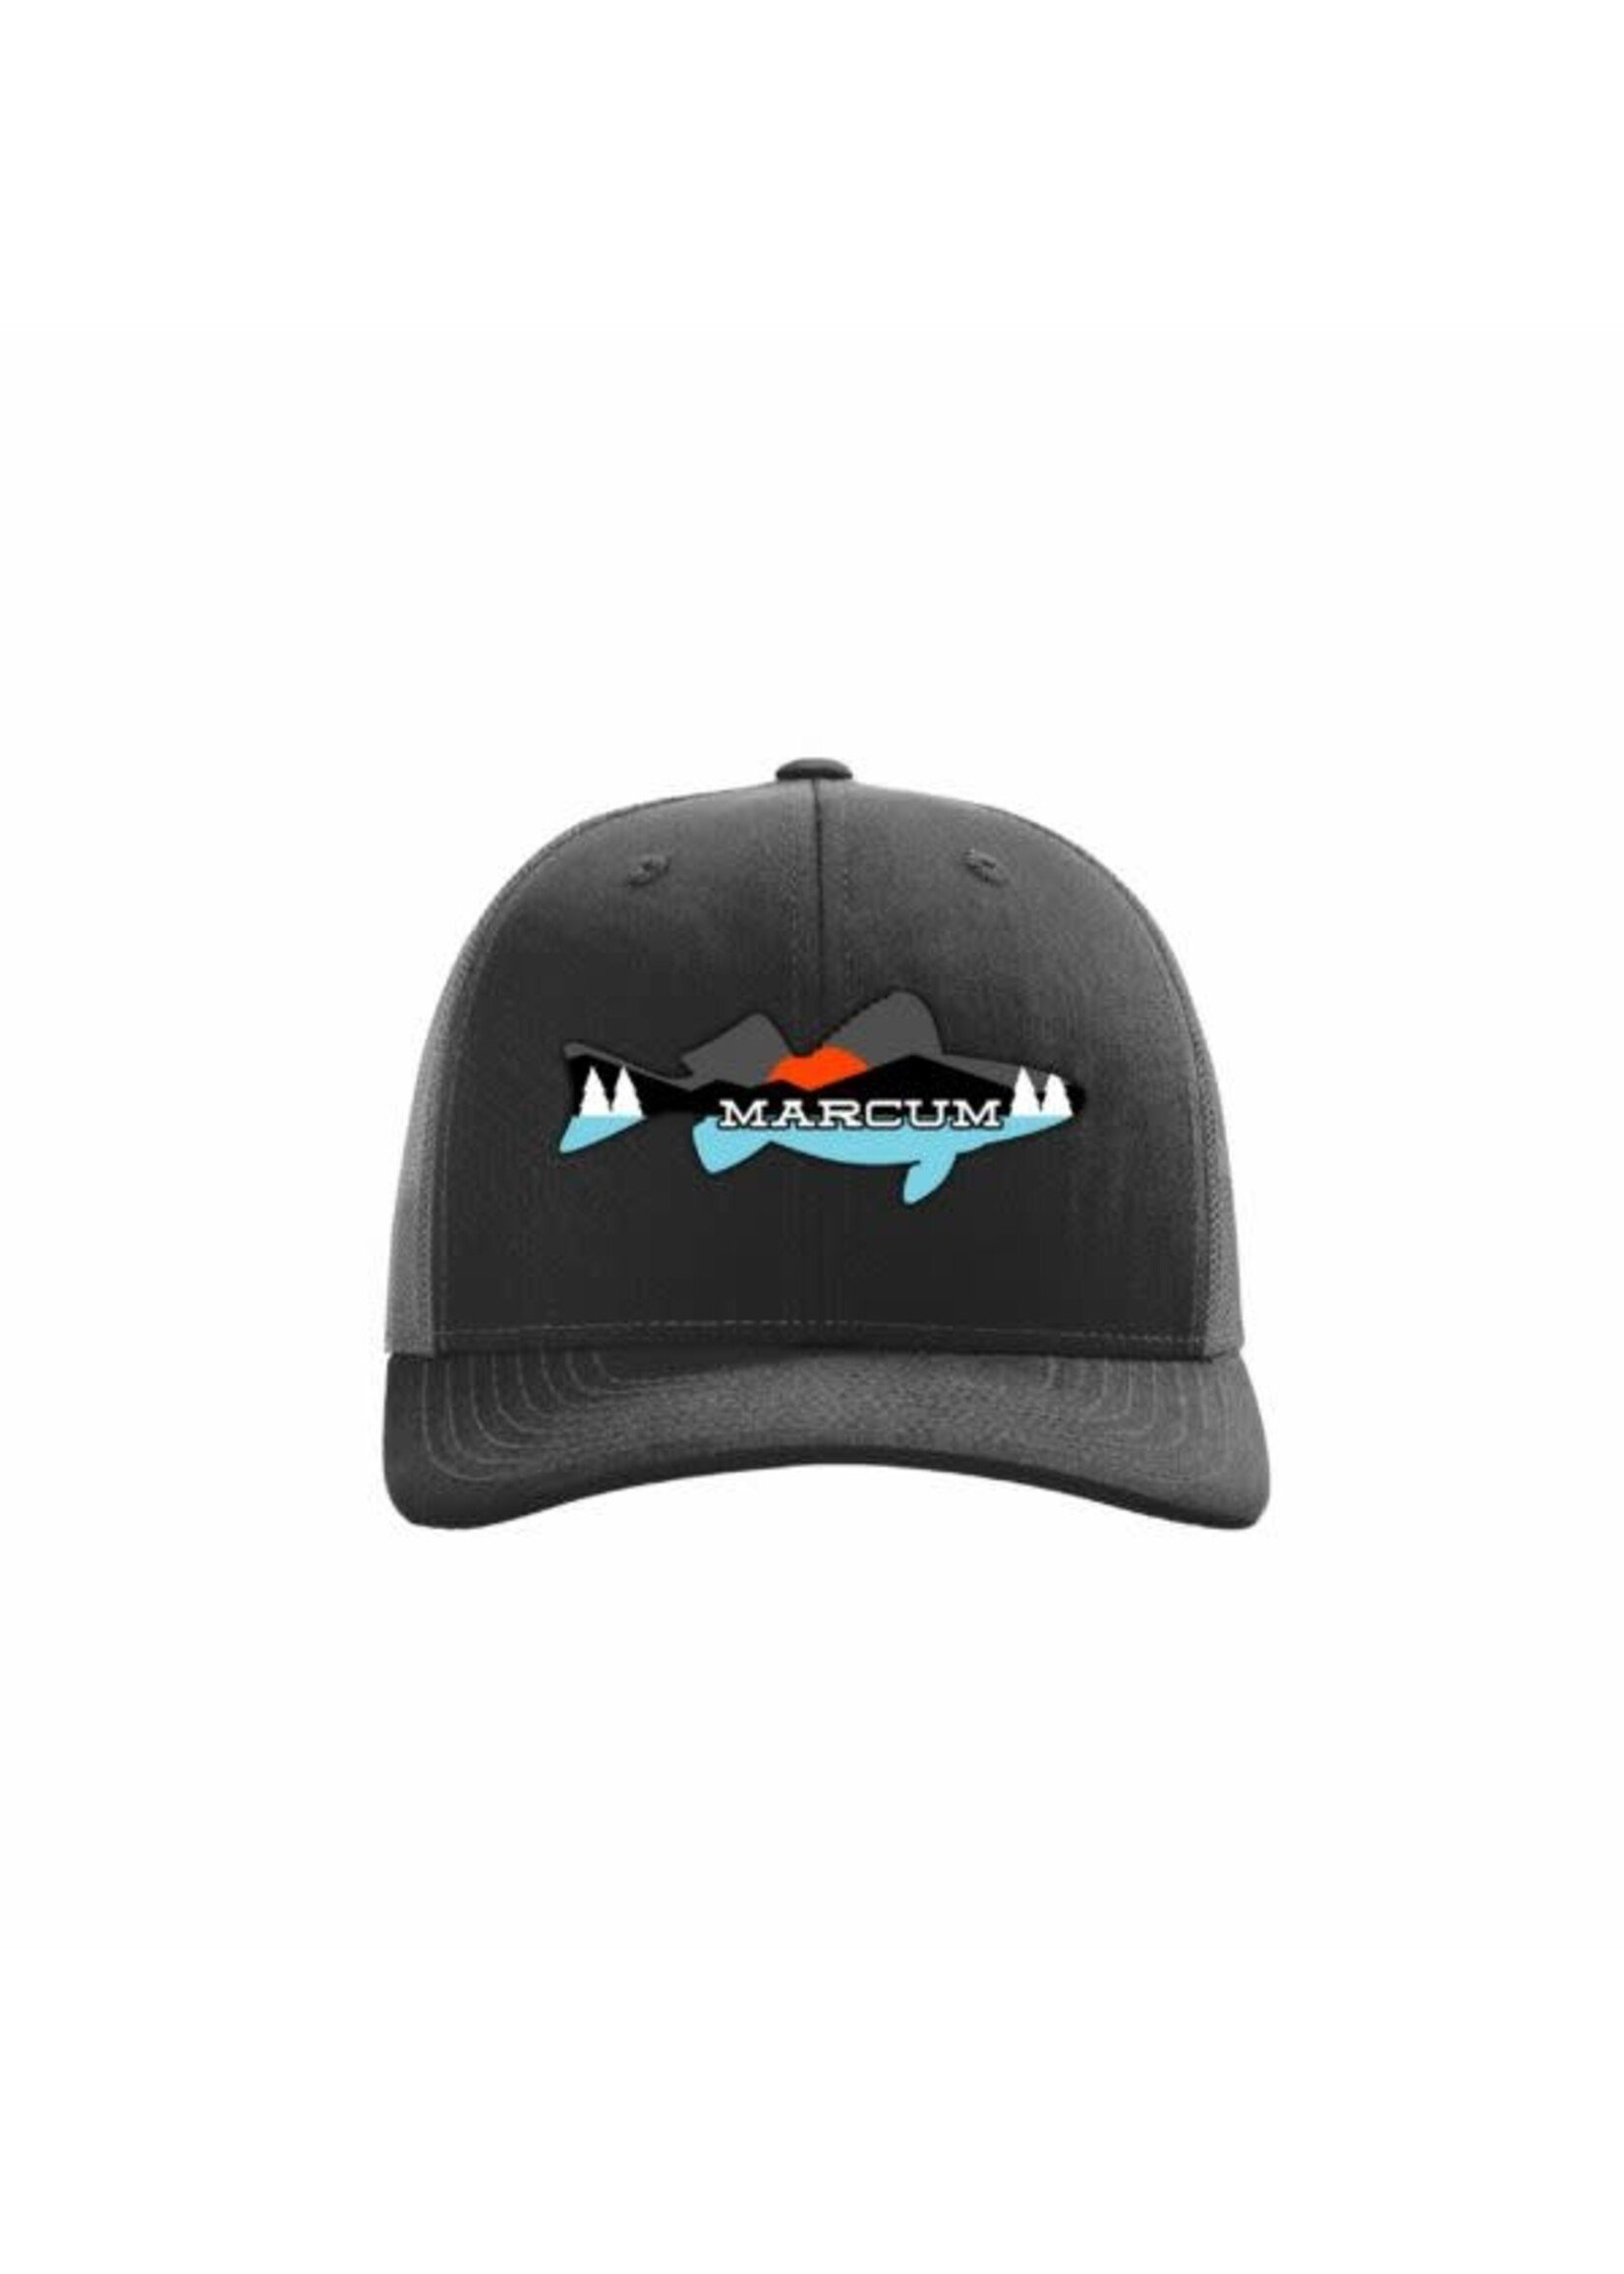 MarCum Black Fish Hat - Tackle Shack